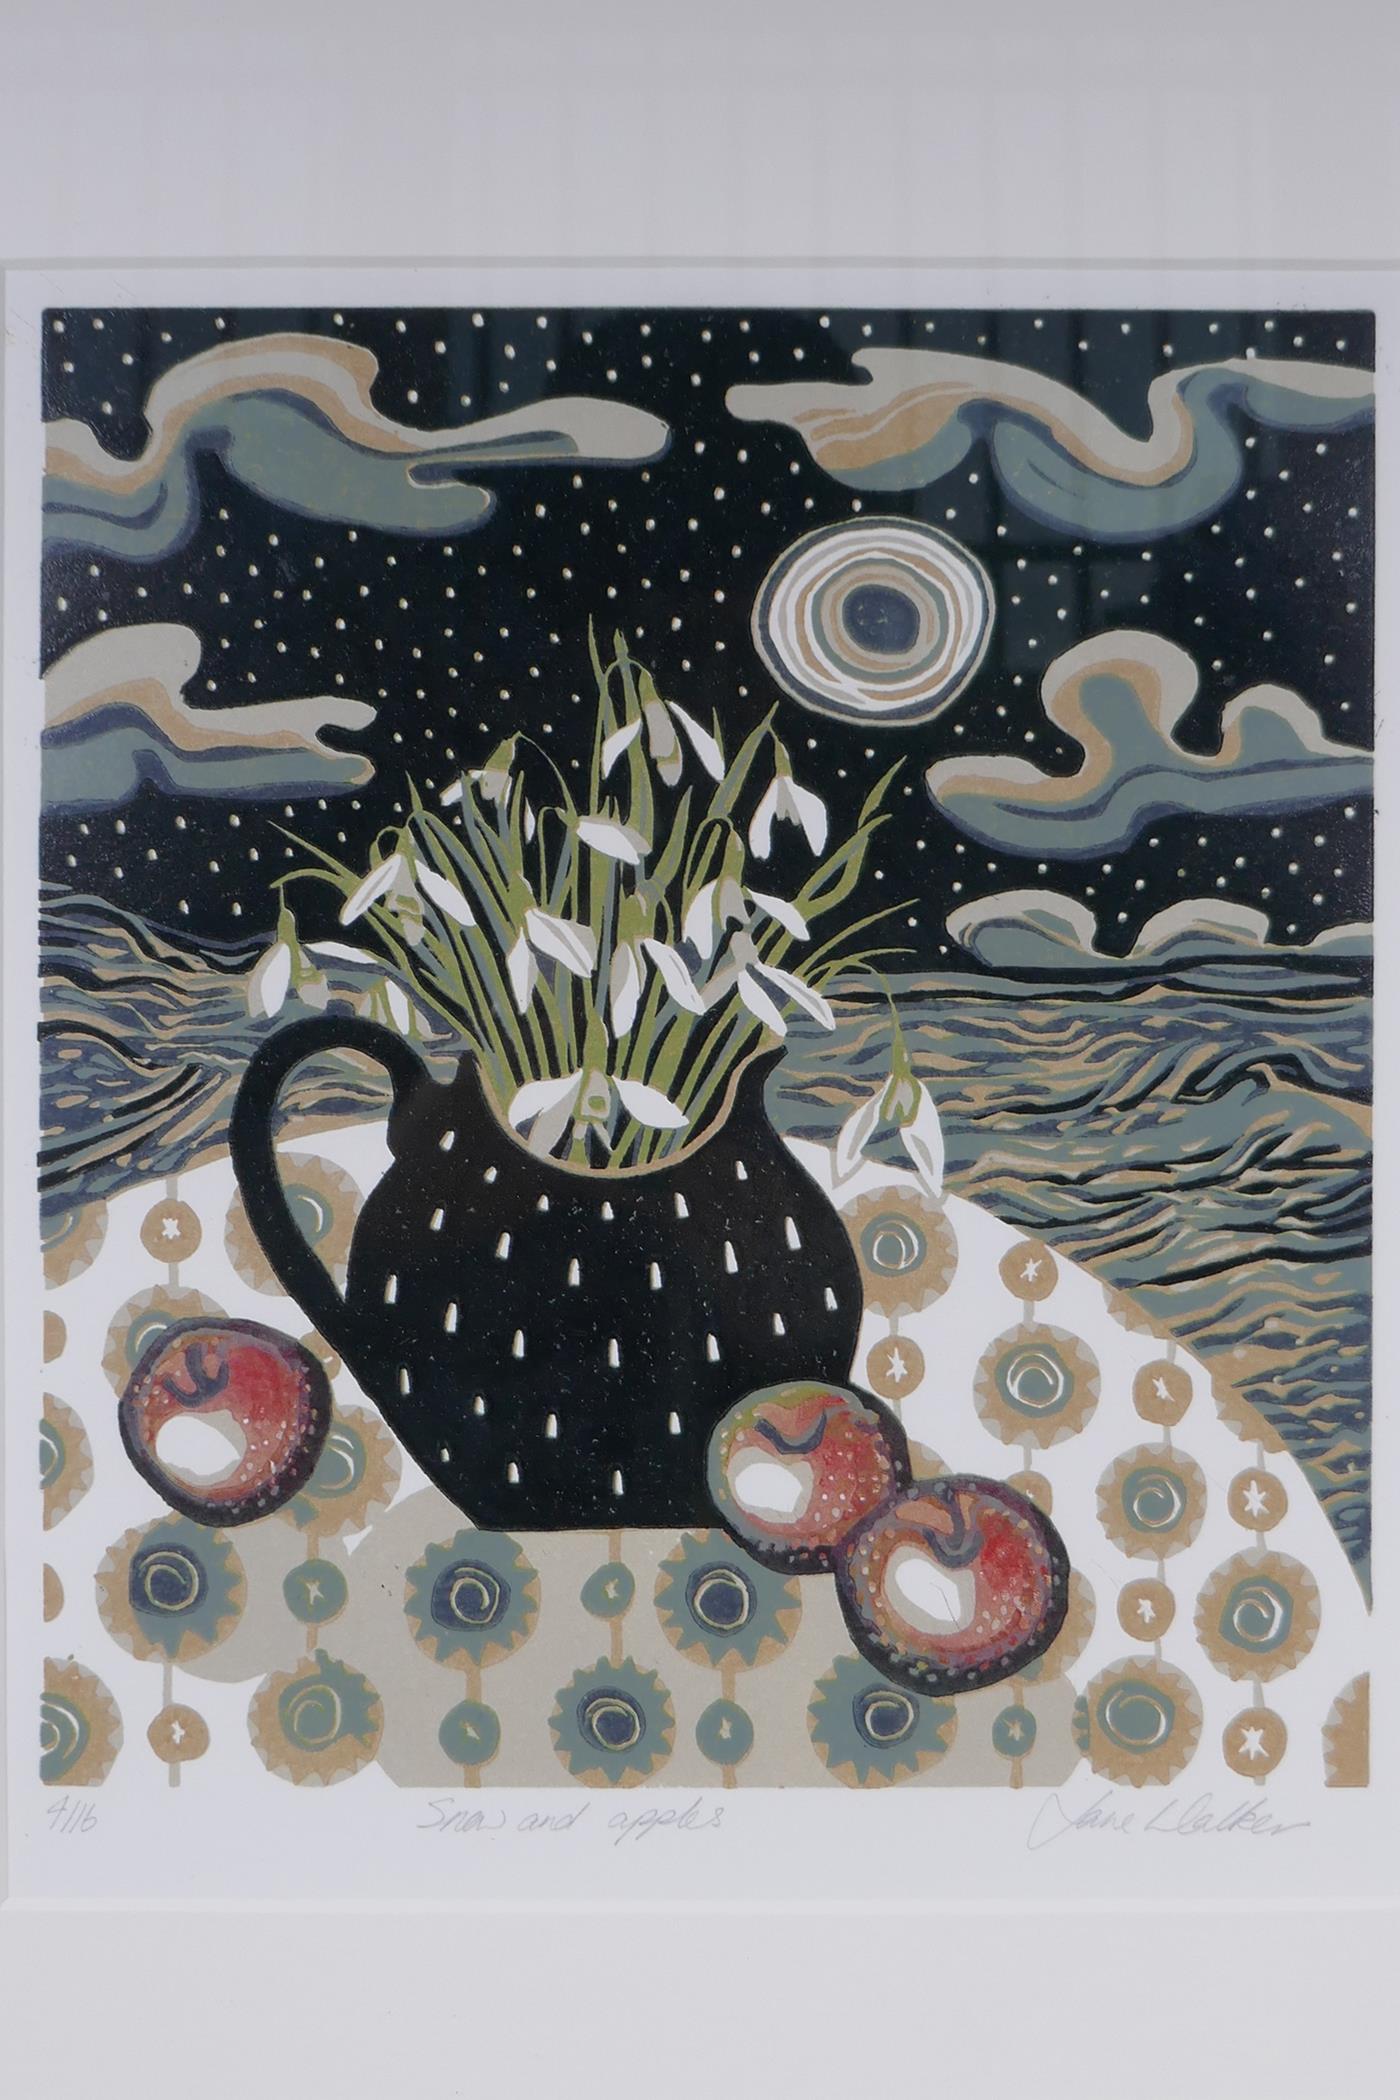 Jane Walker, Scottish, Snow & Apples, limited edition lino cut still life print, 4/16, pencil signed - Image 2 of 8